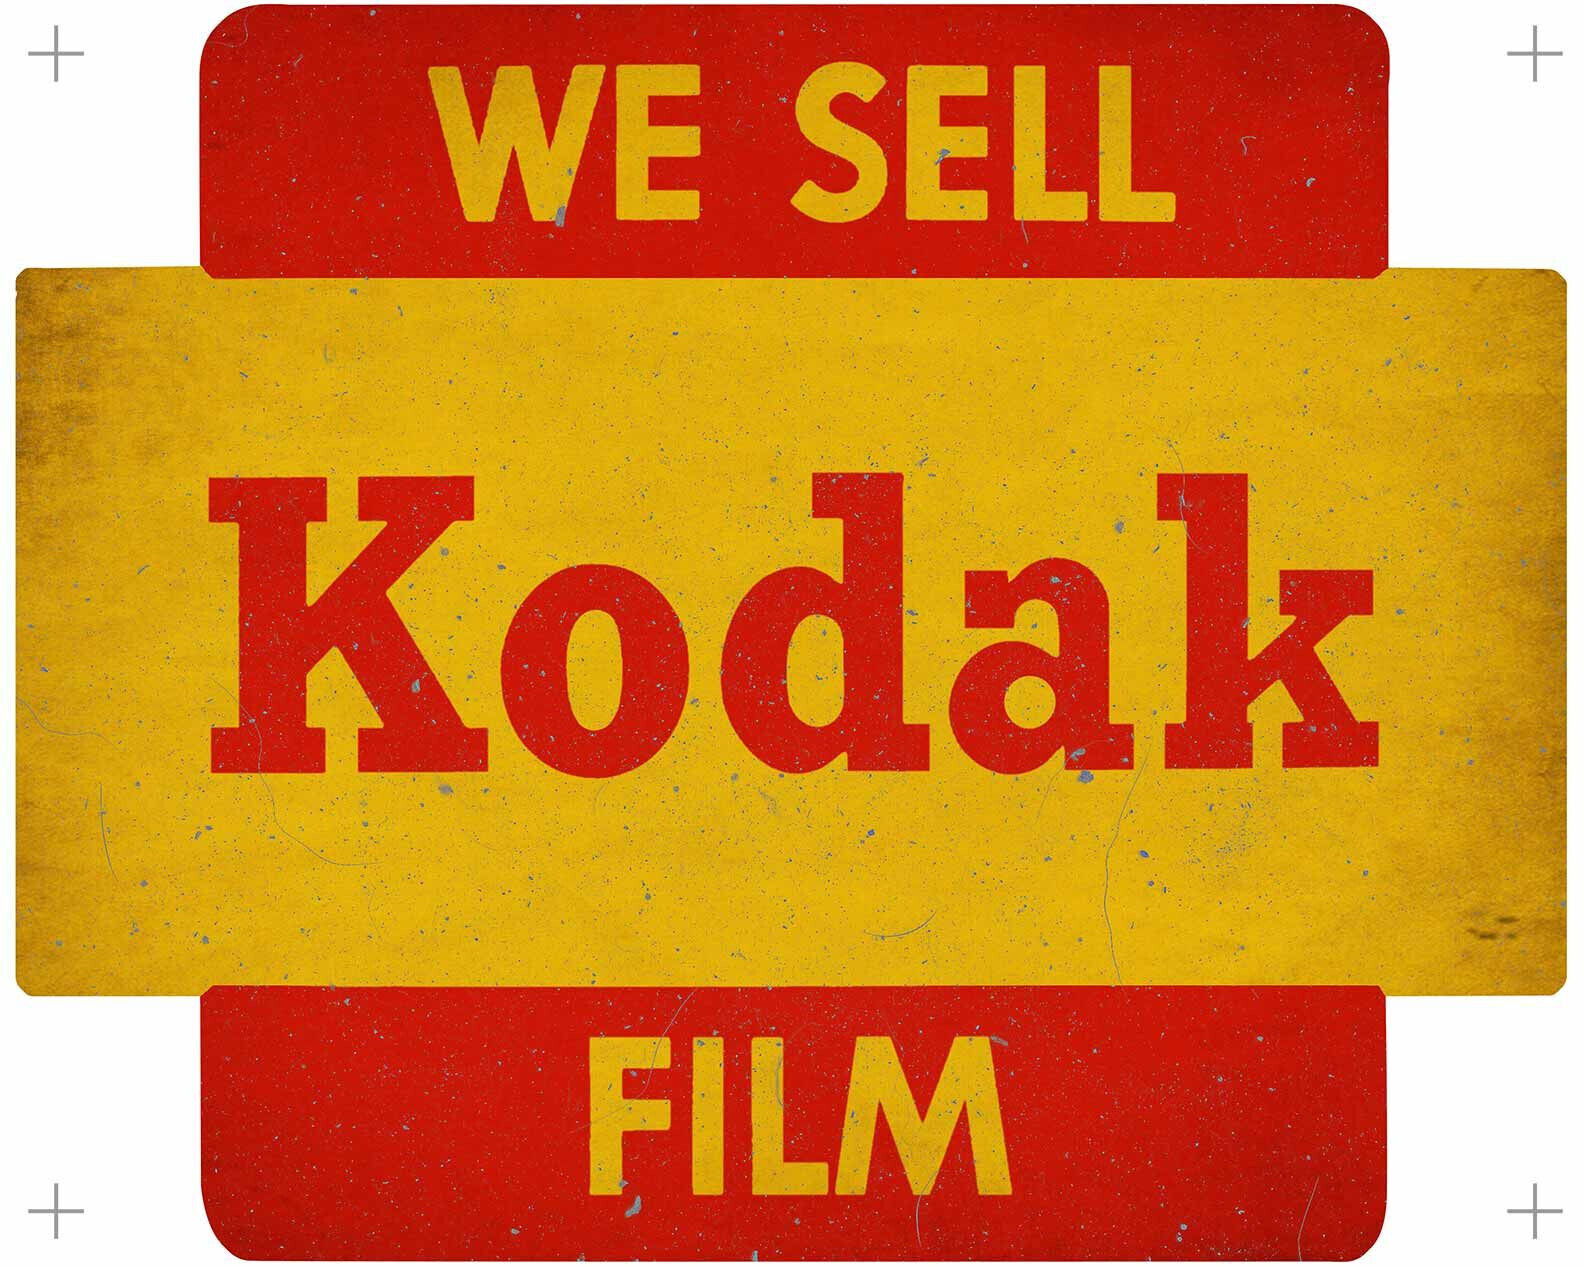 WE SELL KODAK FILM BRIGHT RED YLW HEAVYDUTY USA DOUBLE SIDED METAL ADV AGED SIGN